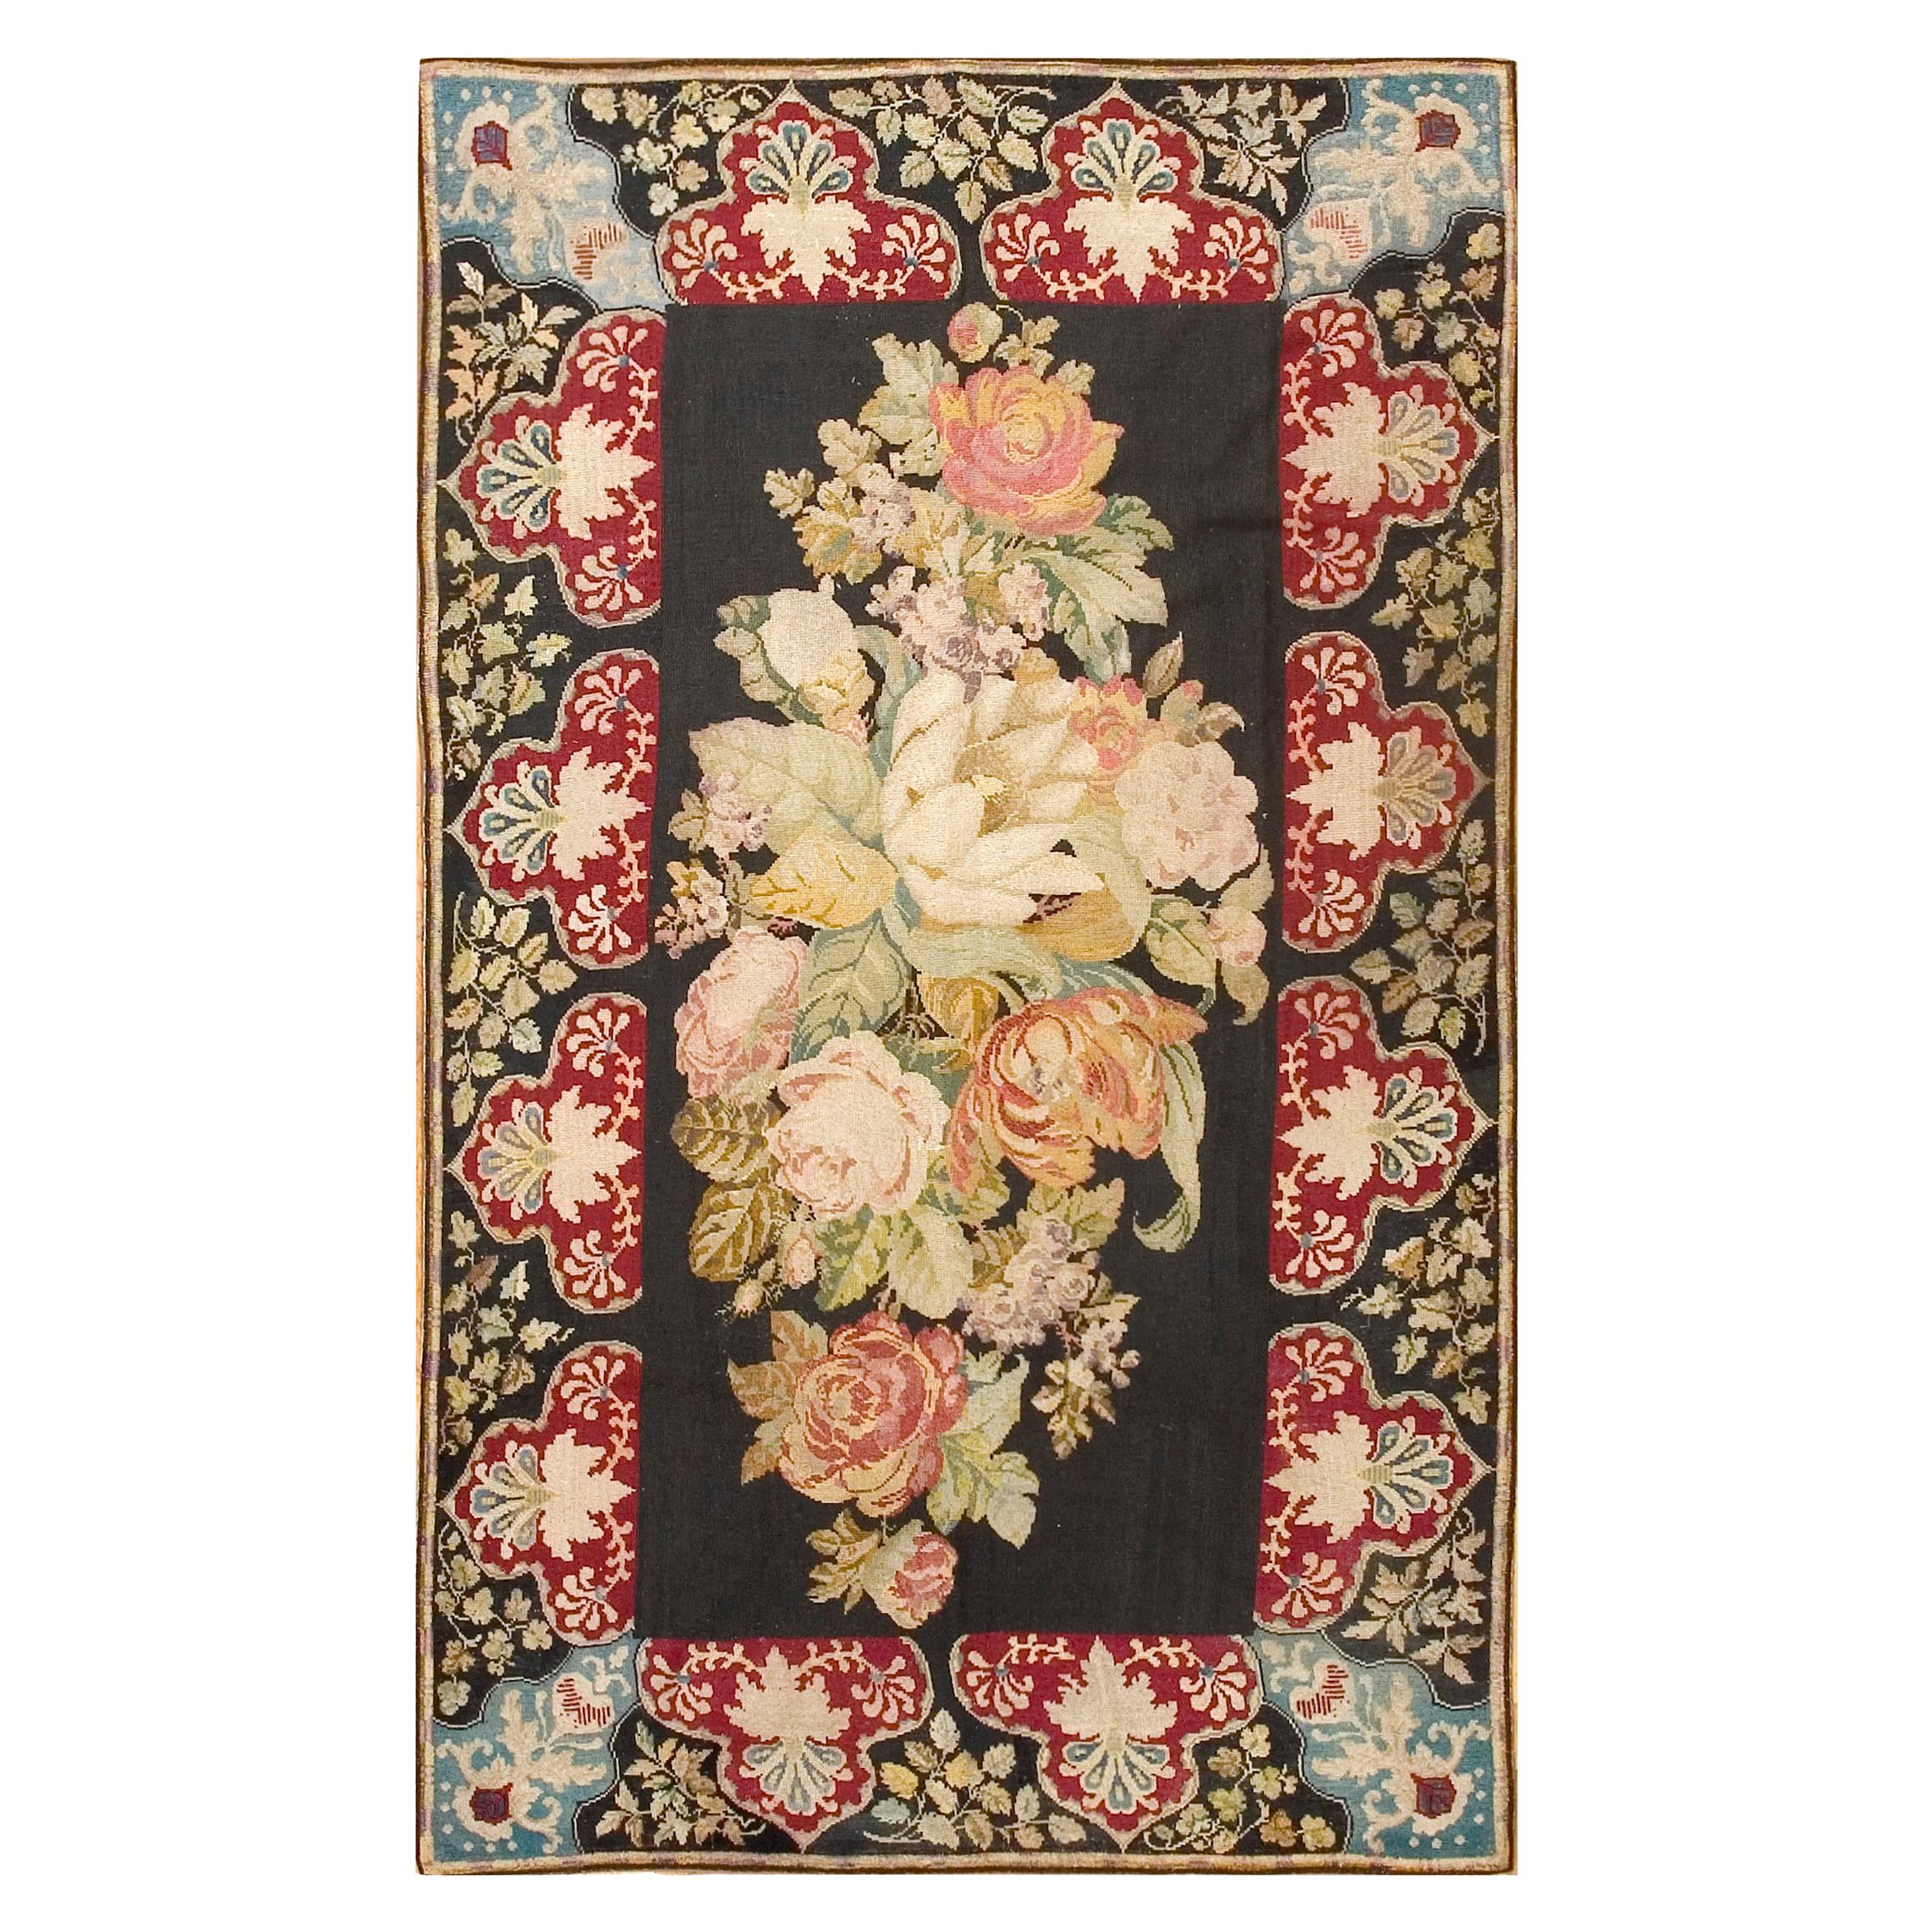 19th Century French Needlepoint Carpet ( 5'2" x 8'8" - 158 x 264 )